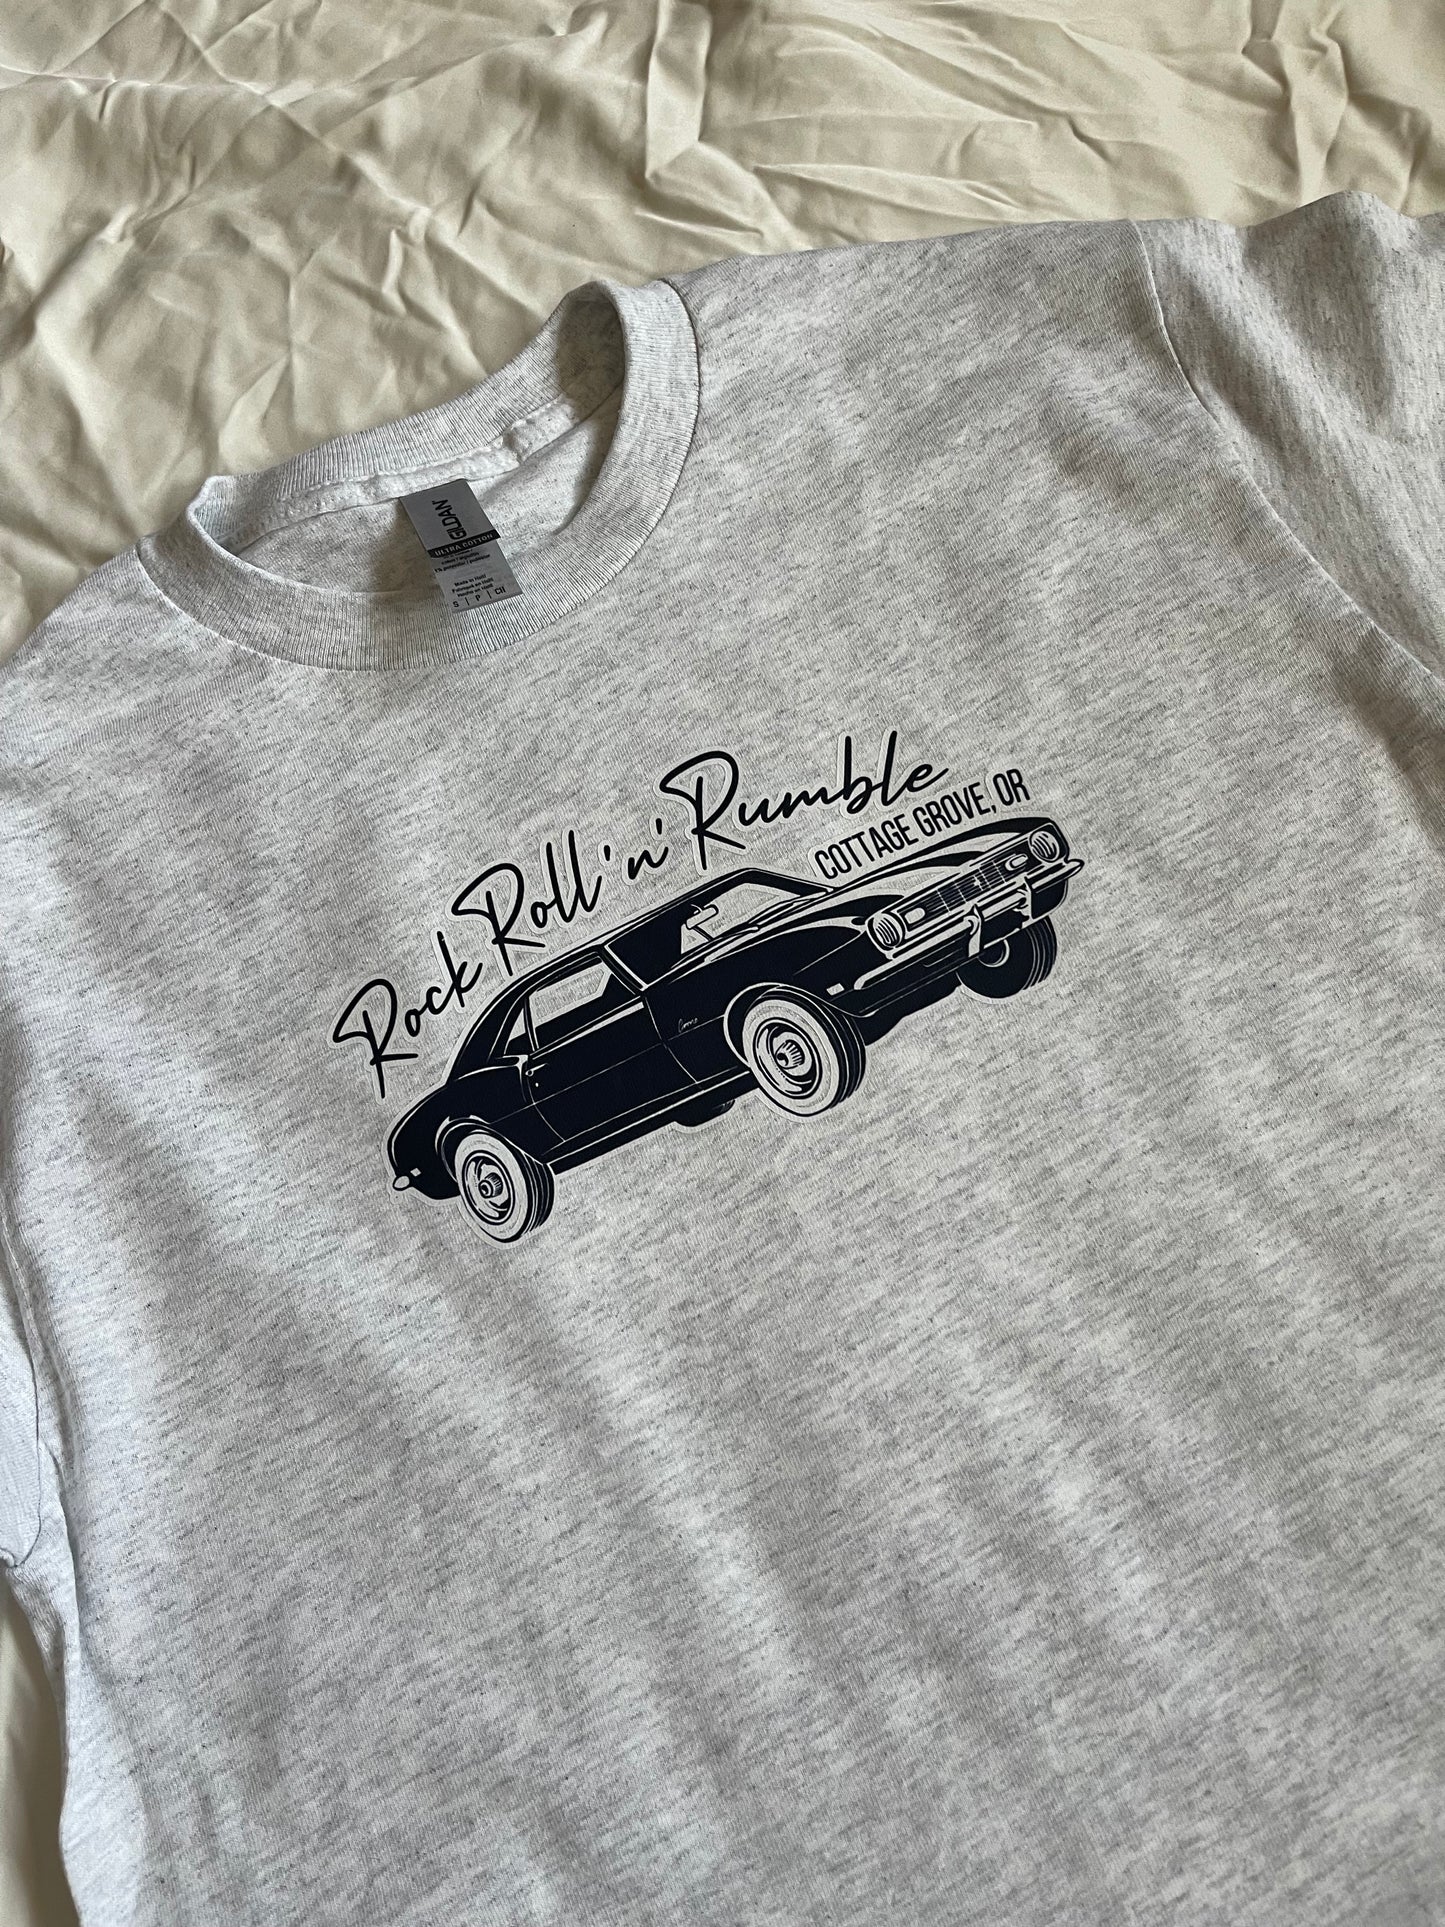 Rock Roll n Rumble T shirt